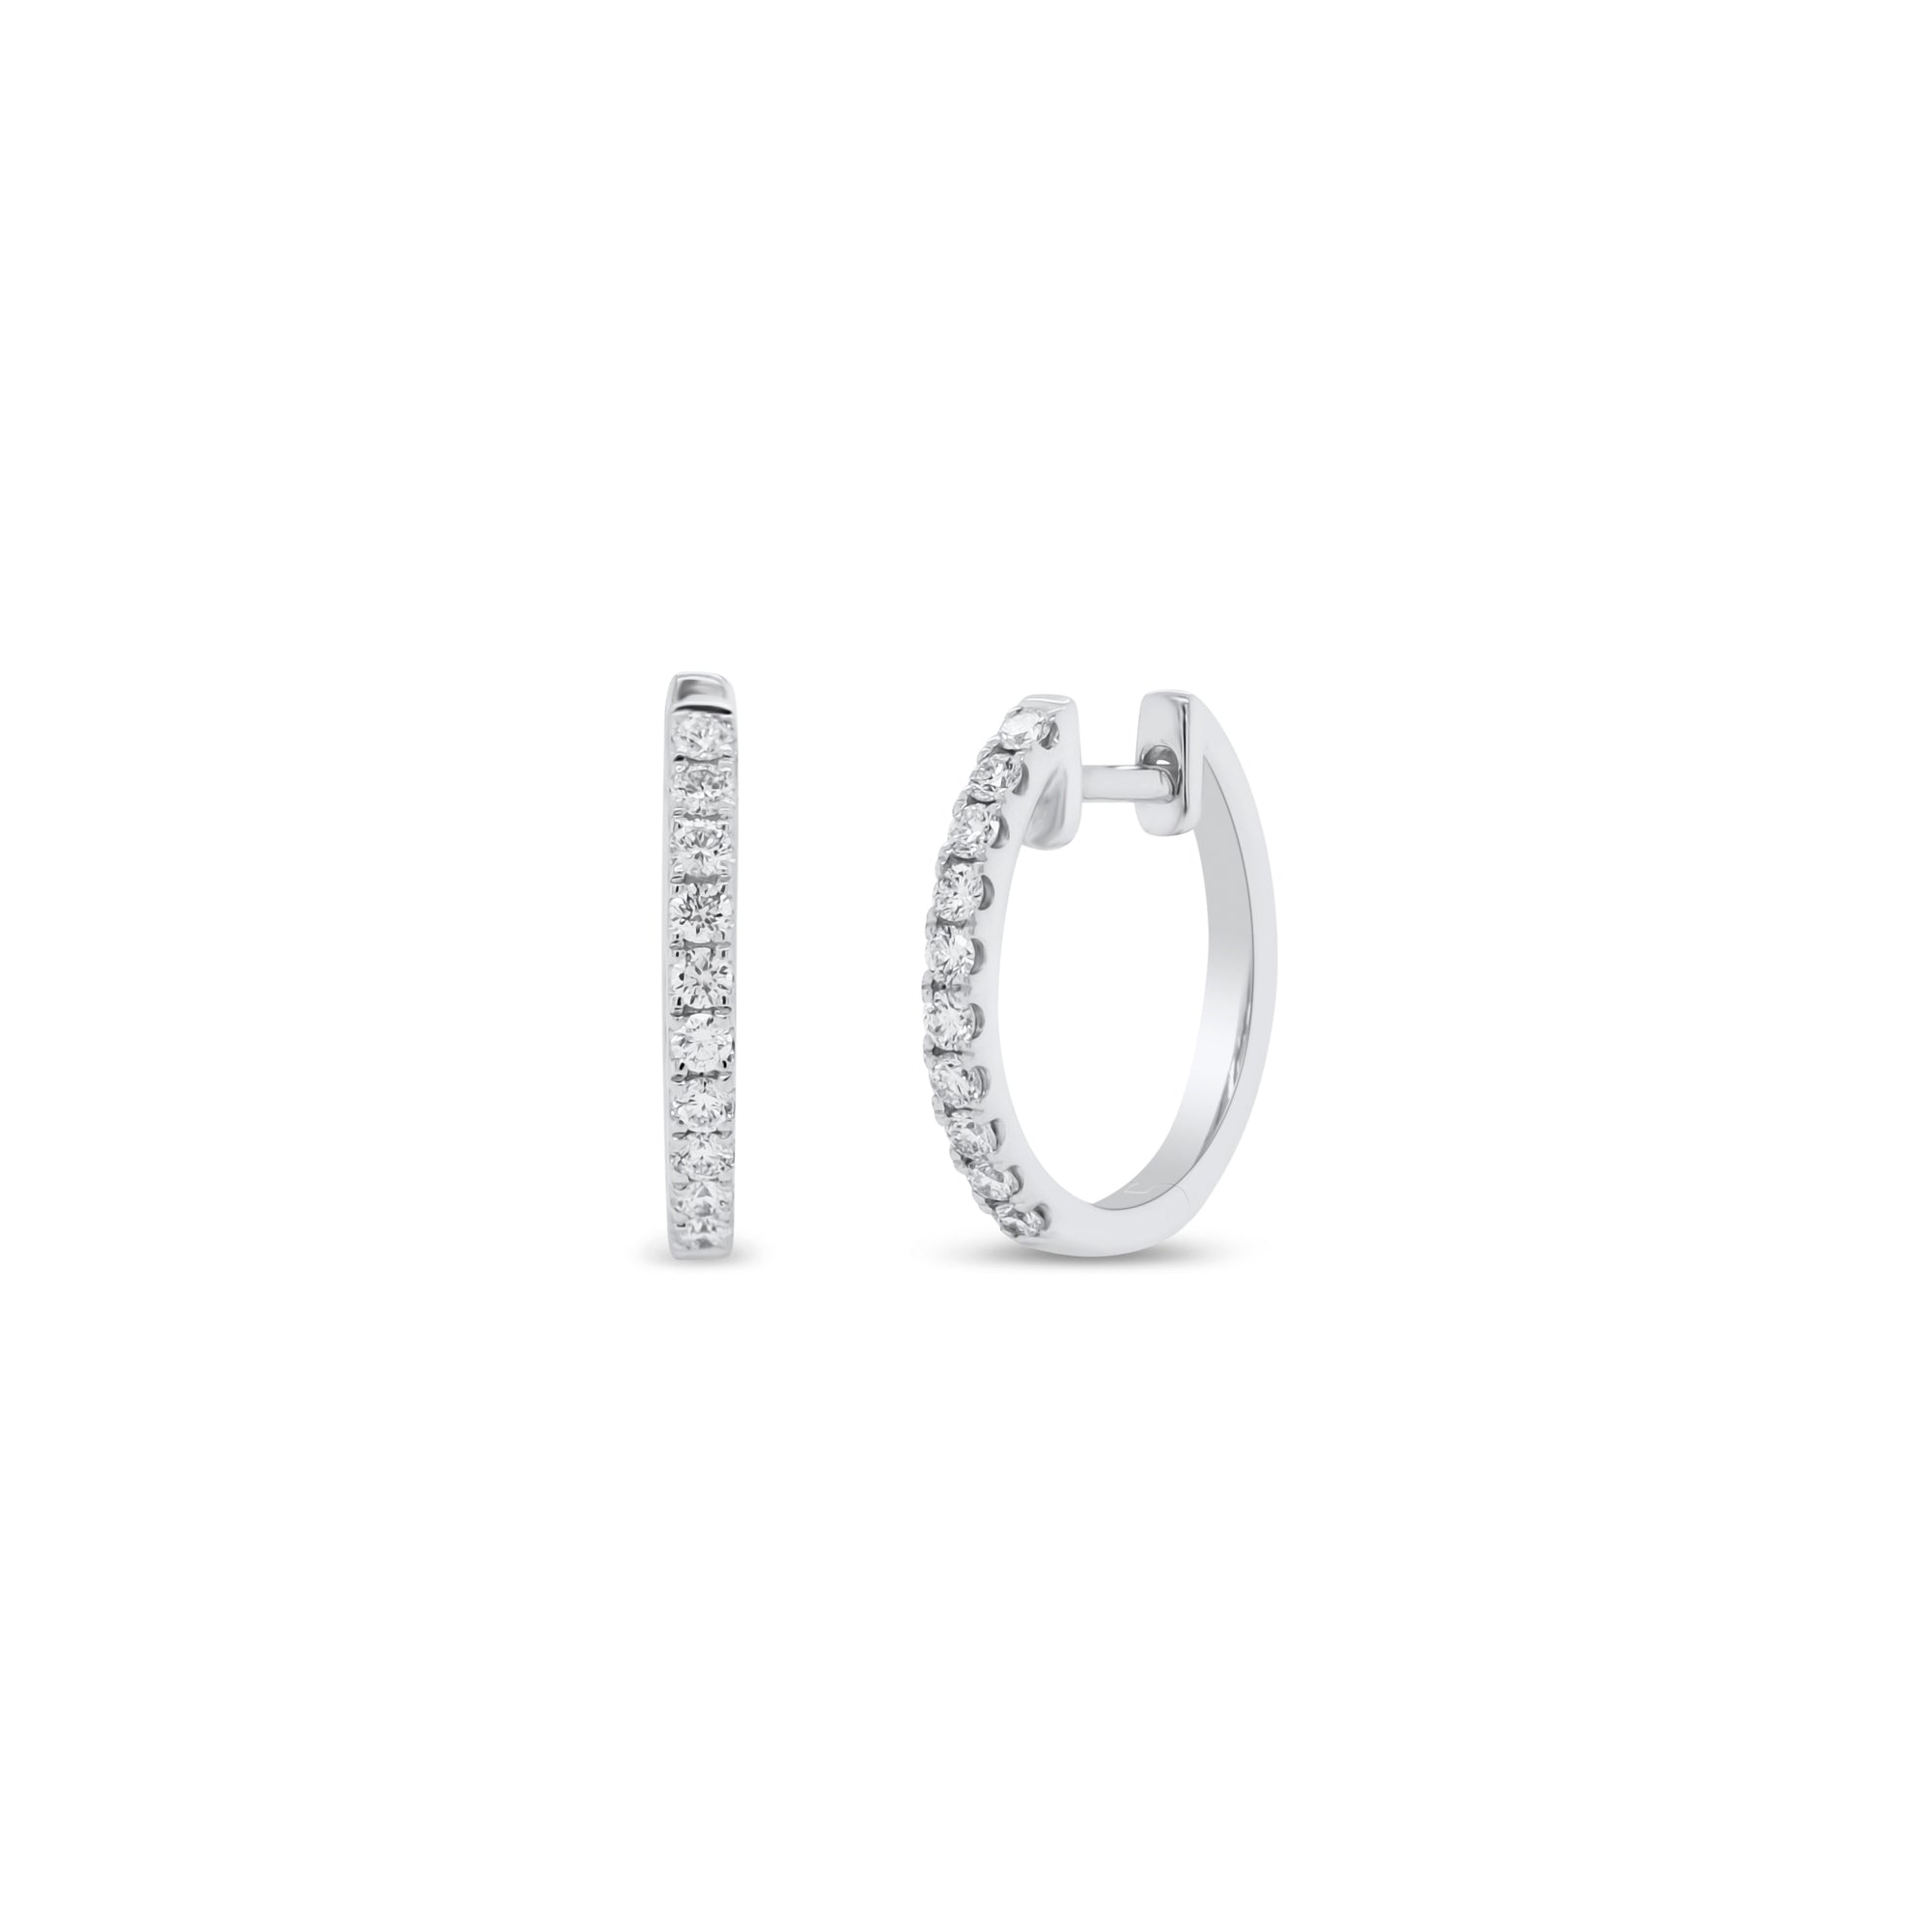 Diamond simple huggie earrings - 14K gold weighing 1.51 grams  - 22 round diamonds totaling 0.15 carats